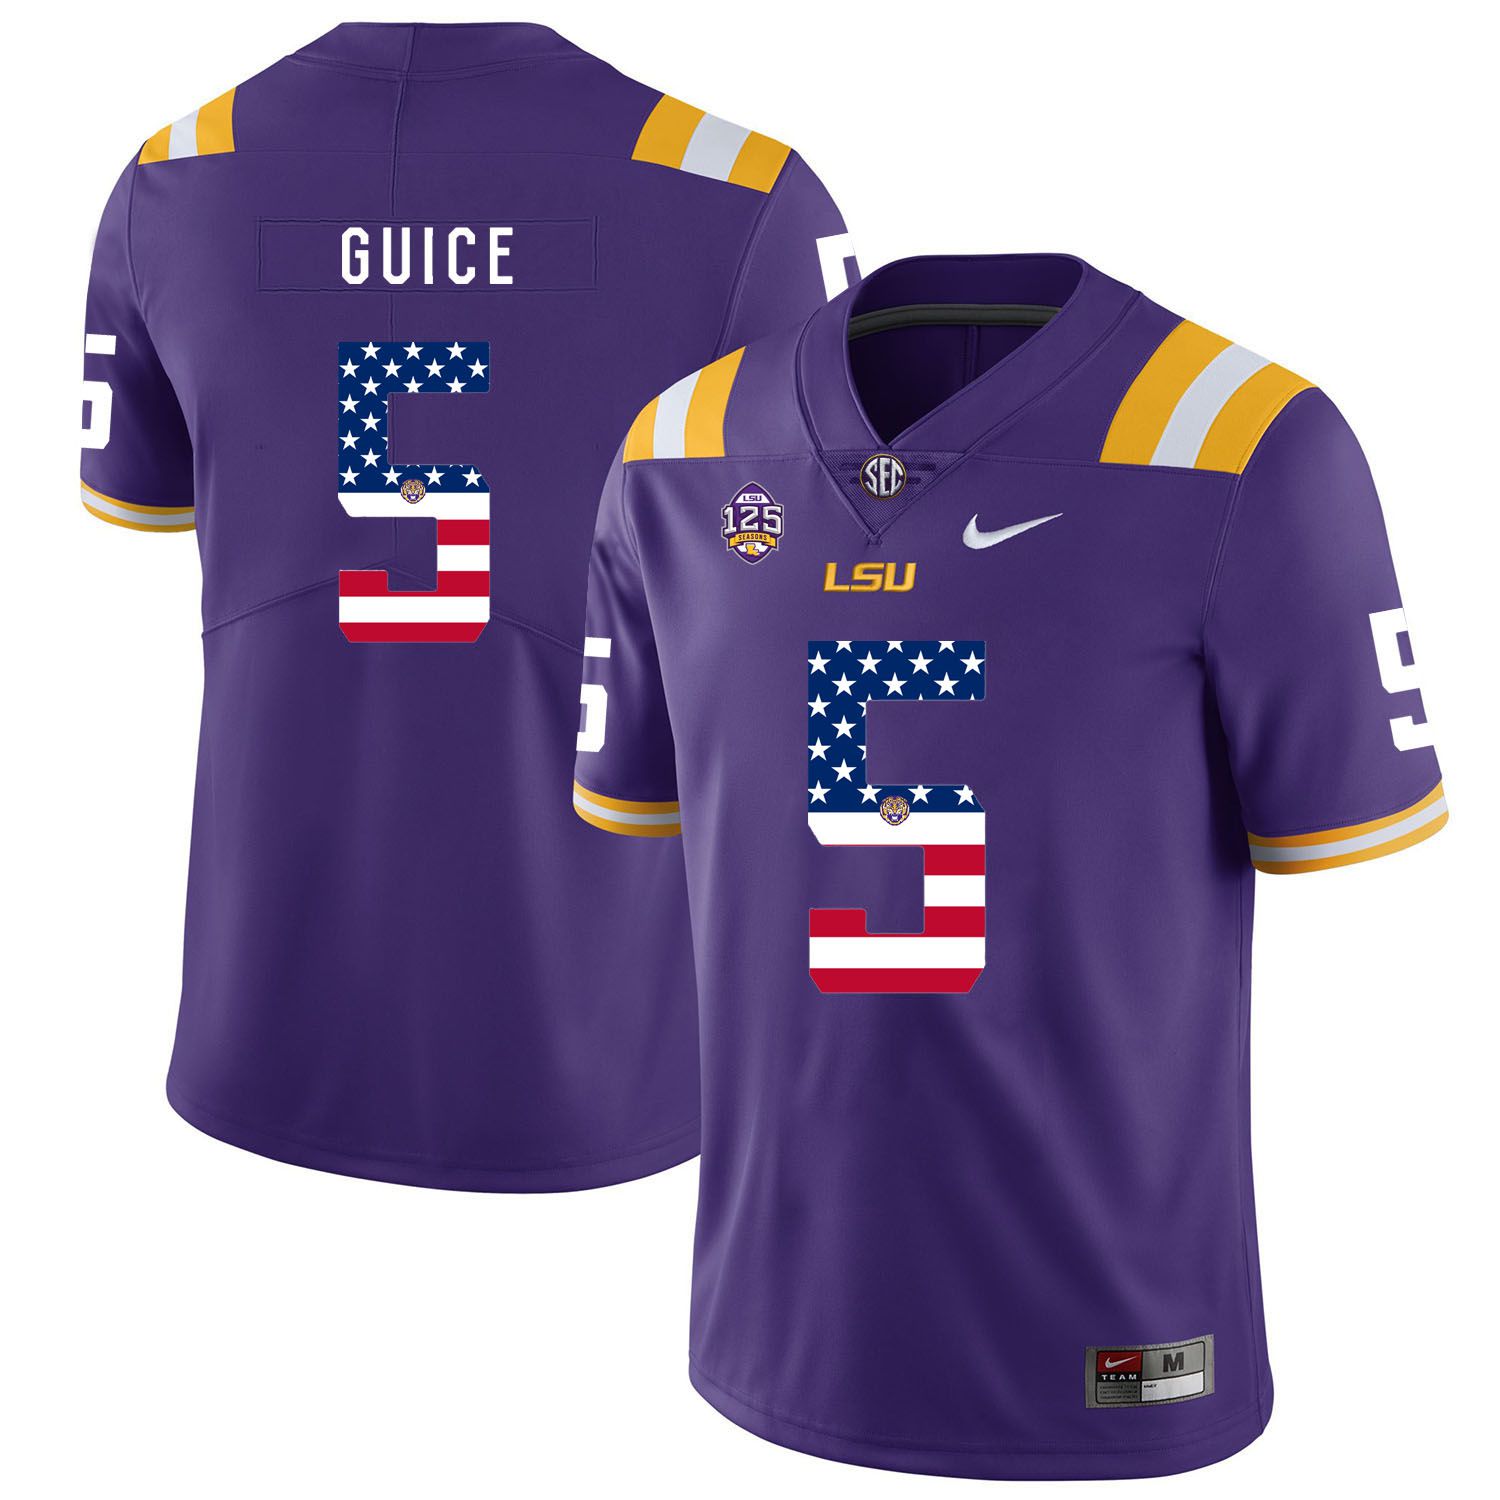 Men LSU Tigers #5 Guice Purple Flag Customized NCAA Jerseys